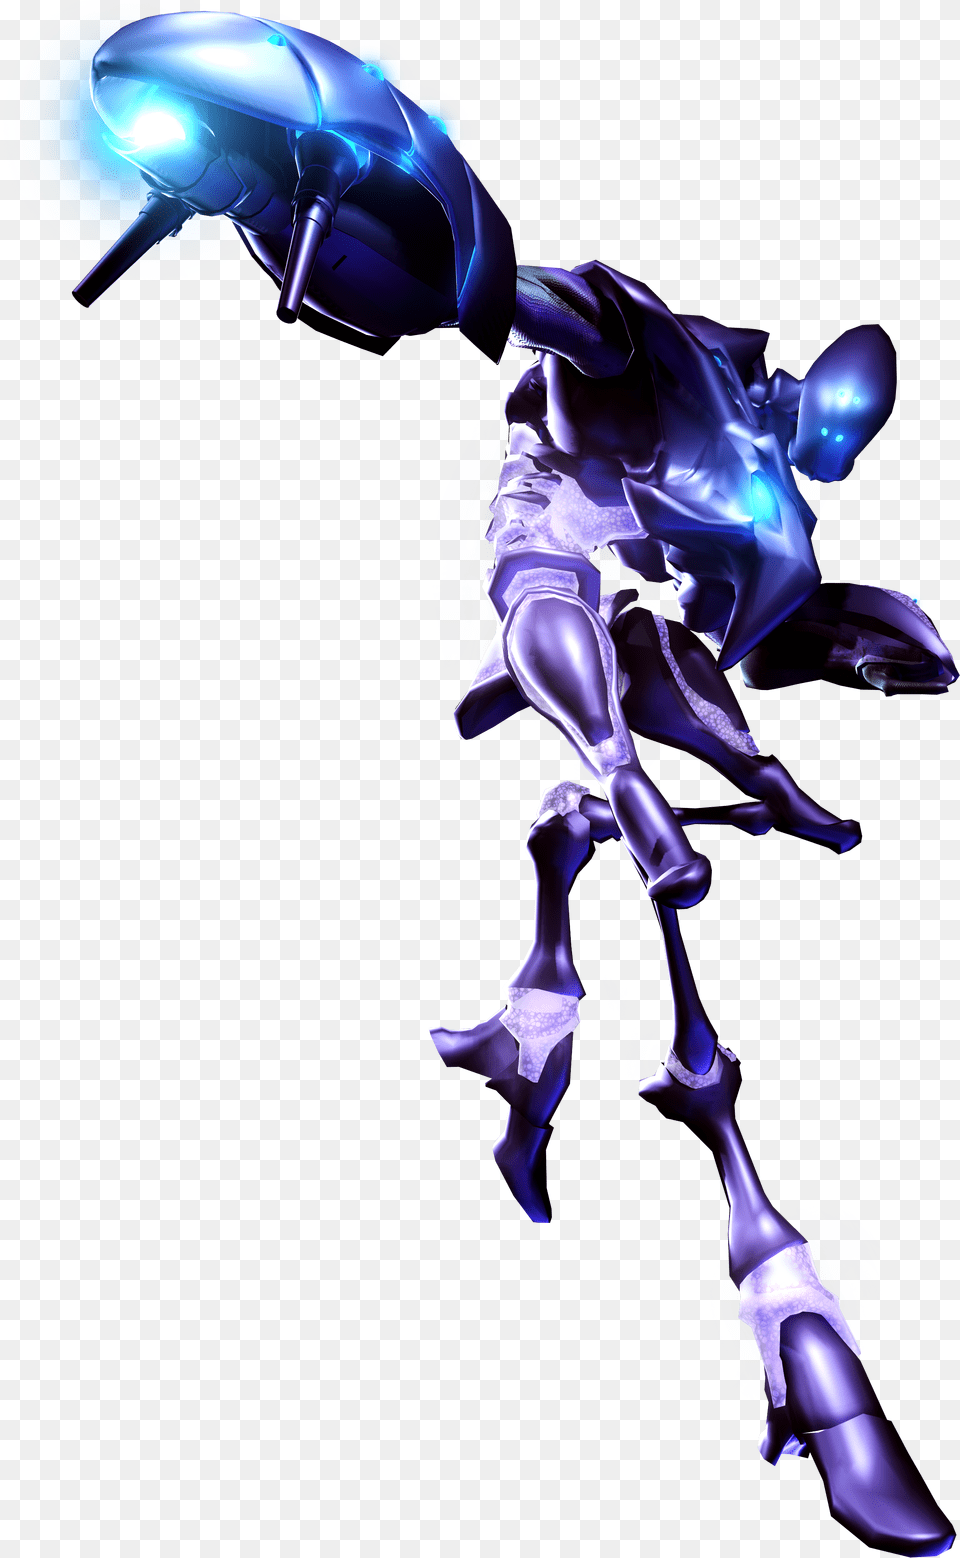 Noxus Metroid Prime Hunters Png Image